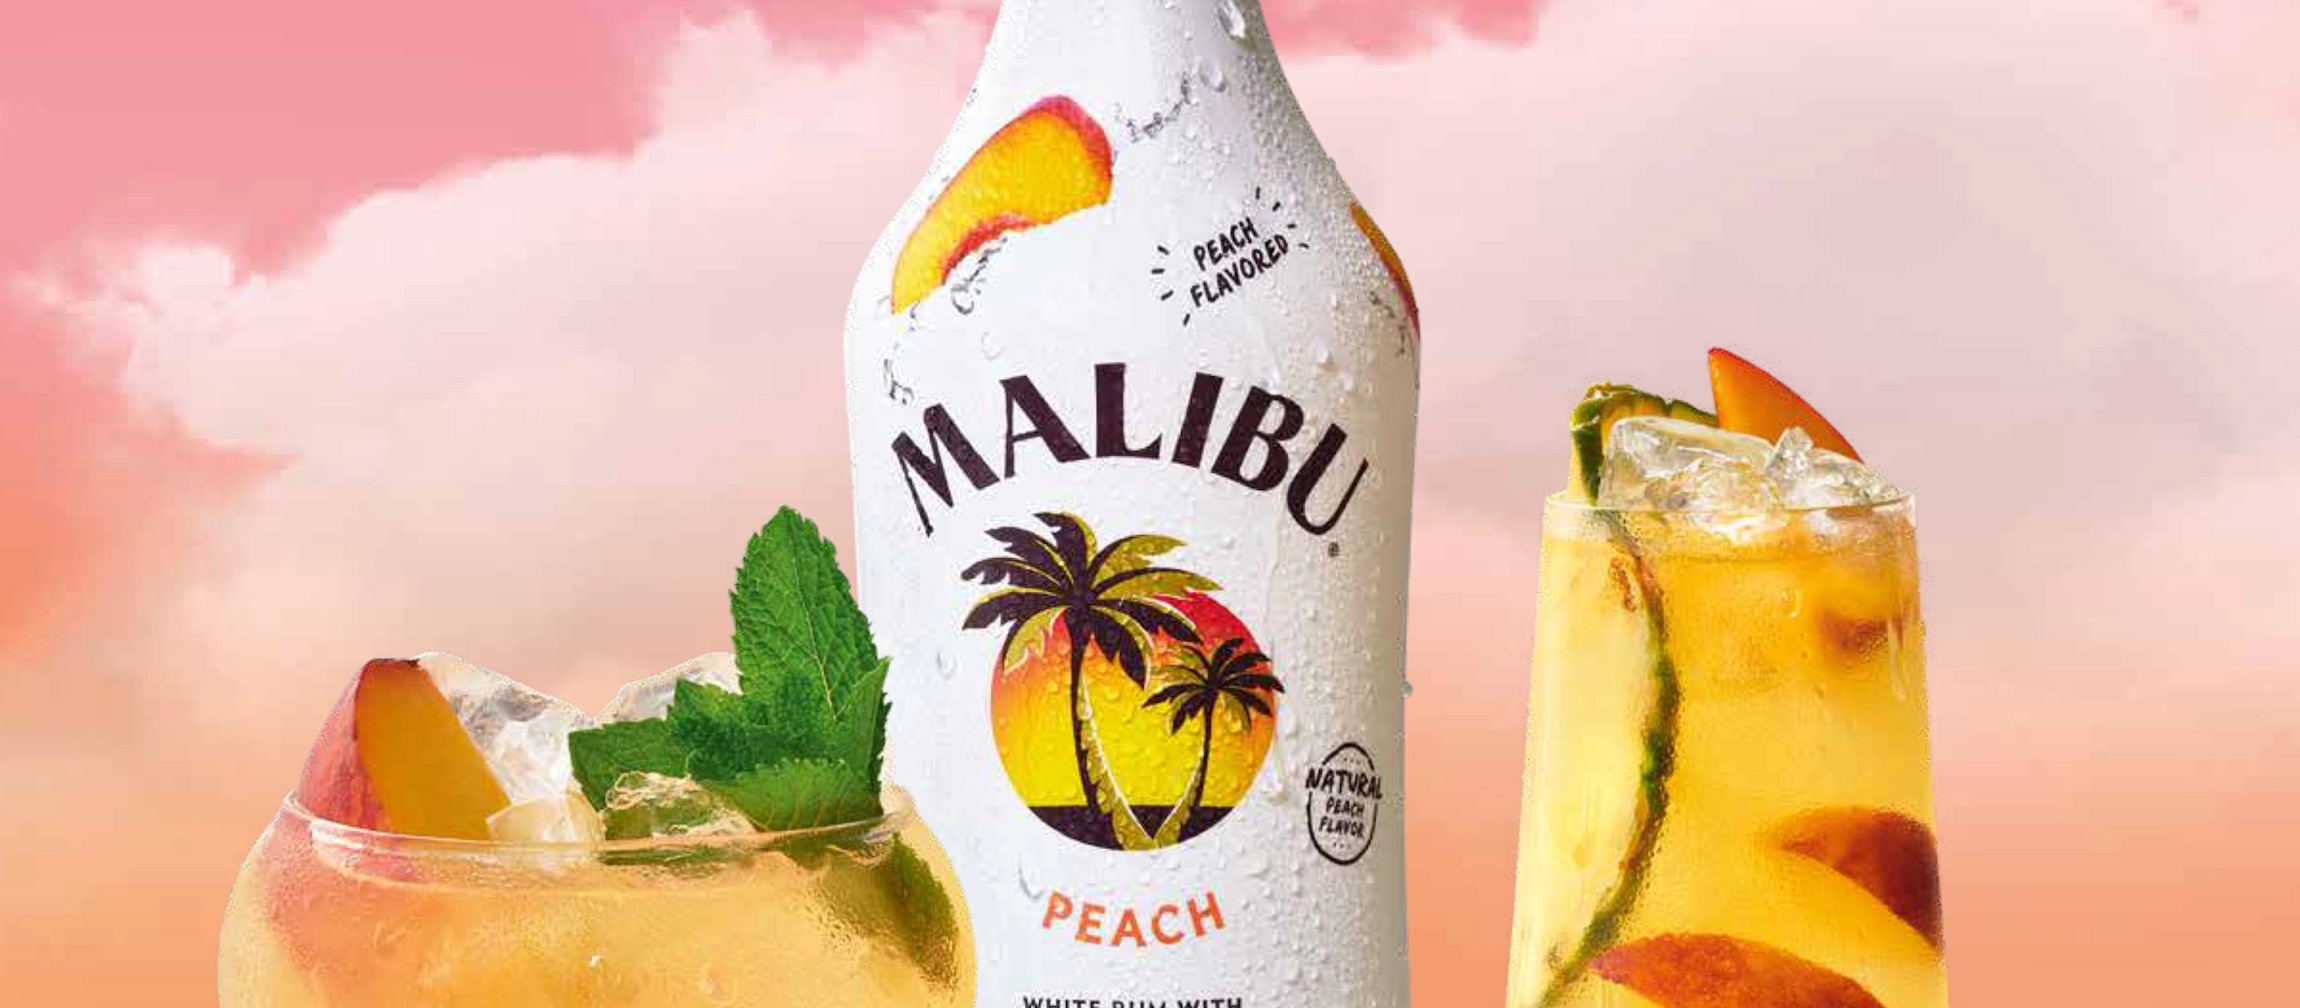 Malibu peach with drinks